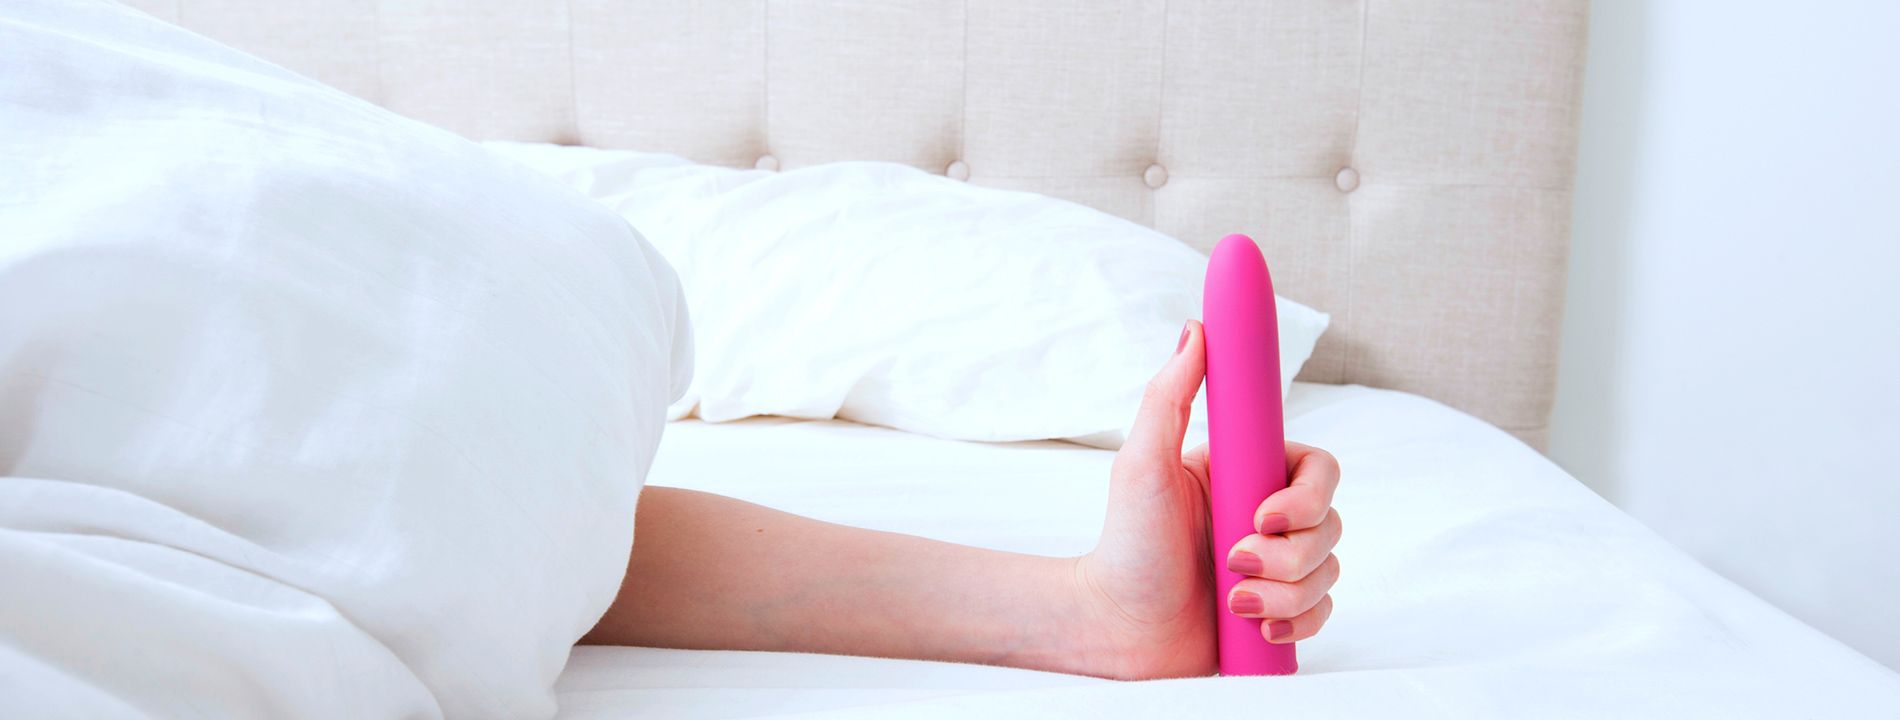 Frau im Bett hält pinken Vibrator in der Hand